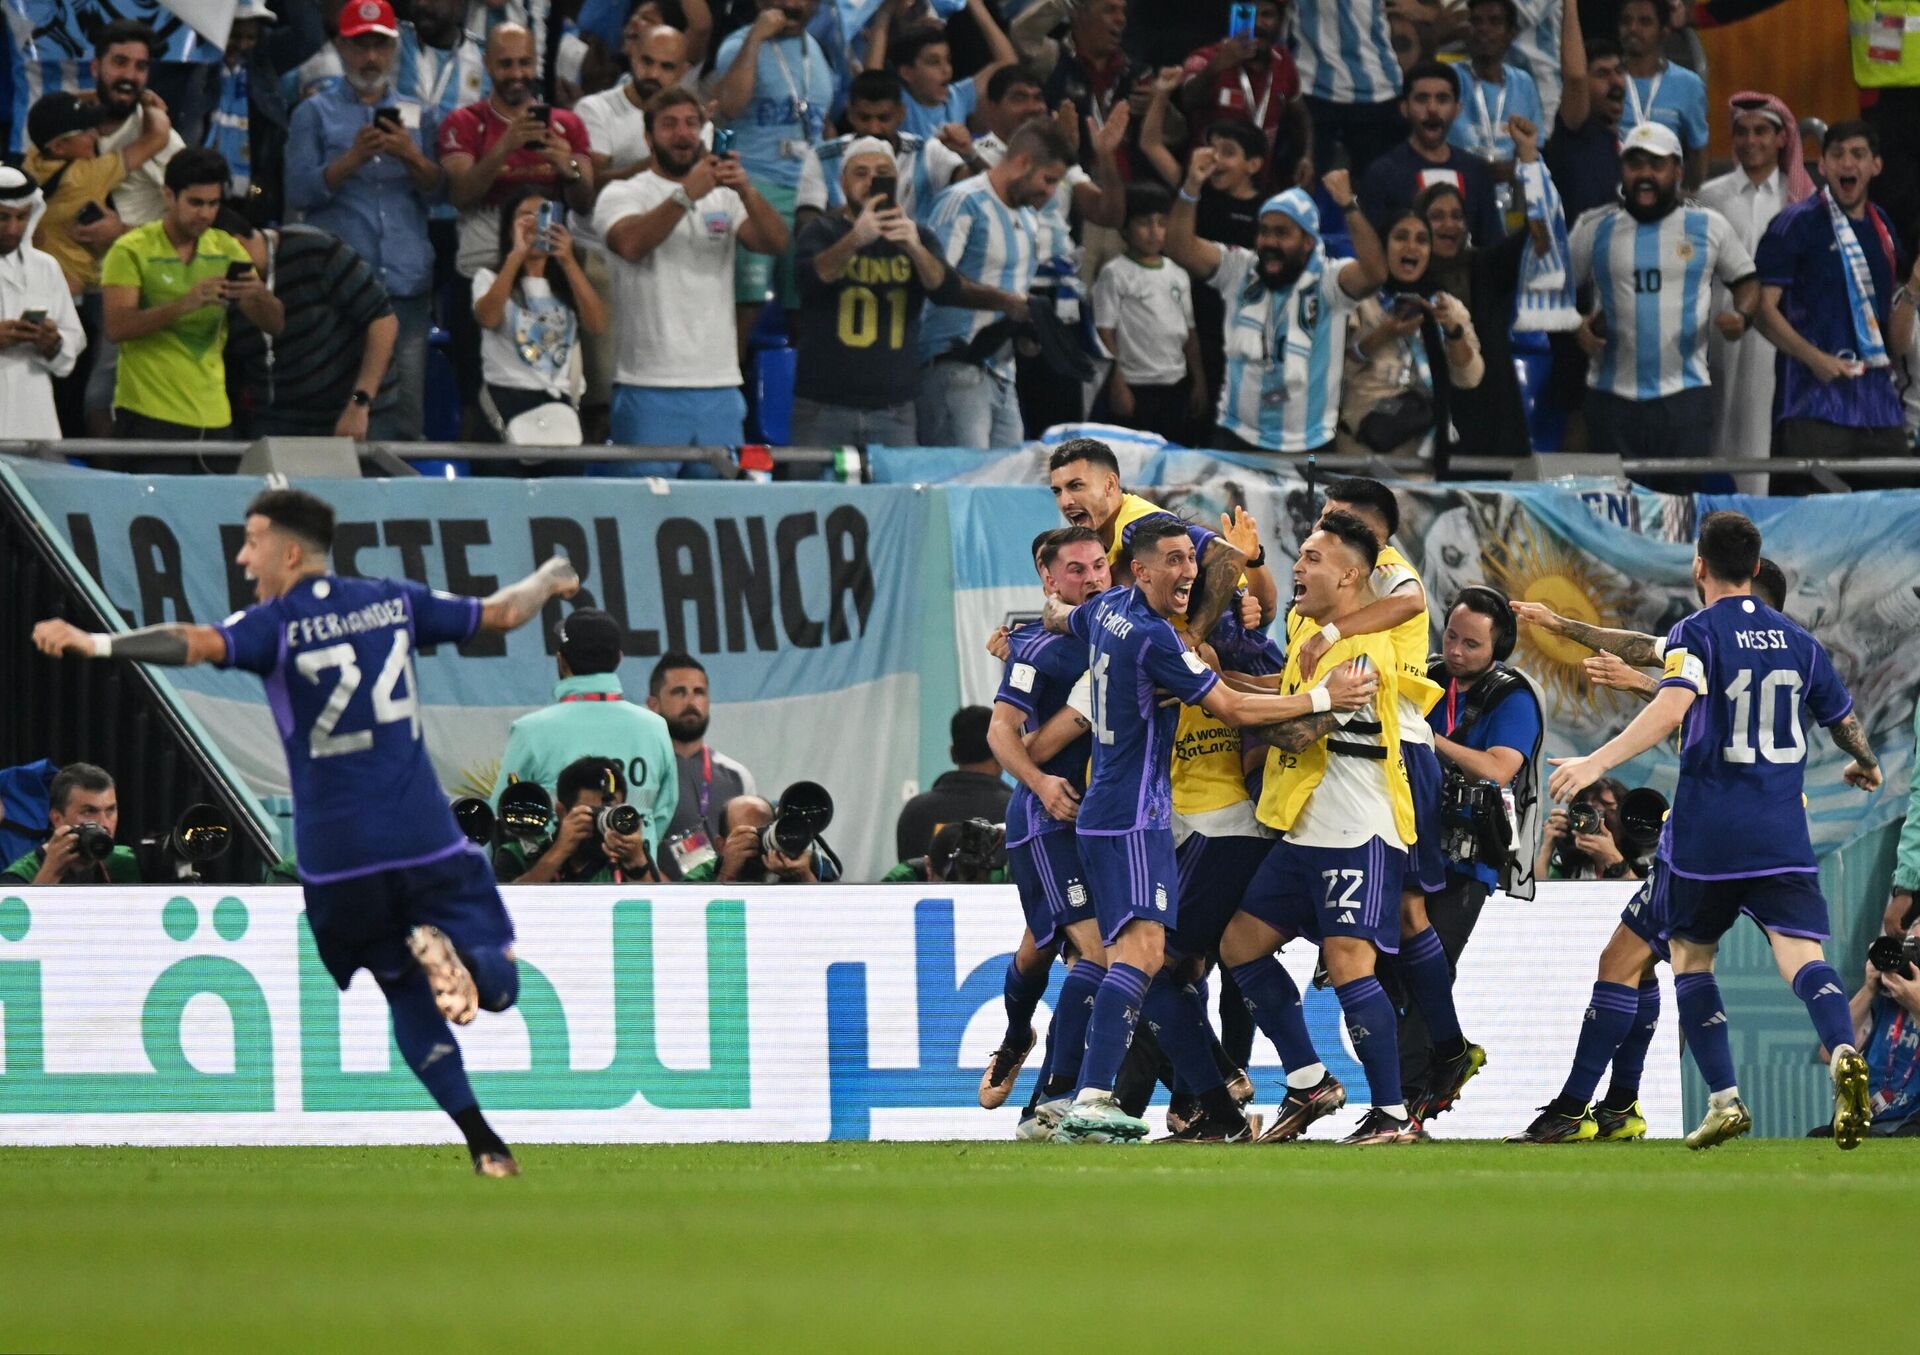 La selección de Argentina celebra un gol contra Polonia, Munidal de Catar 2022 - Sputnik Mundo, 1920, 30.11.2022